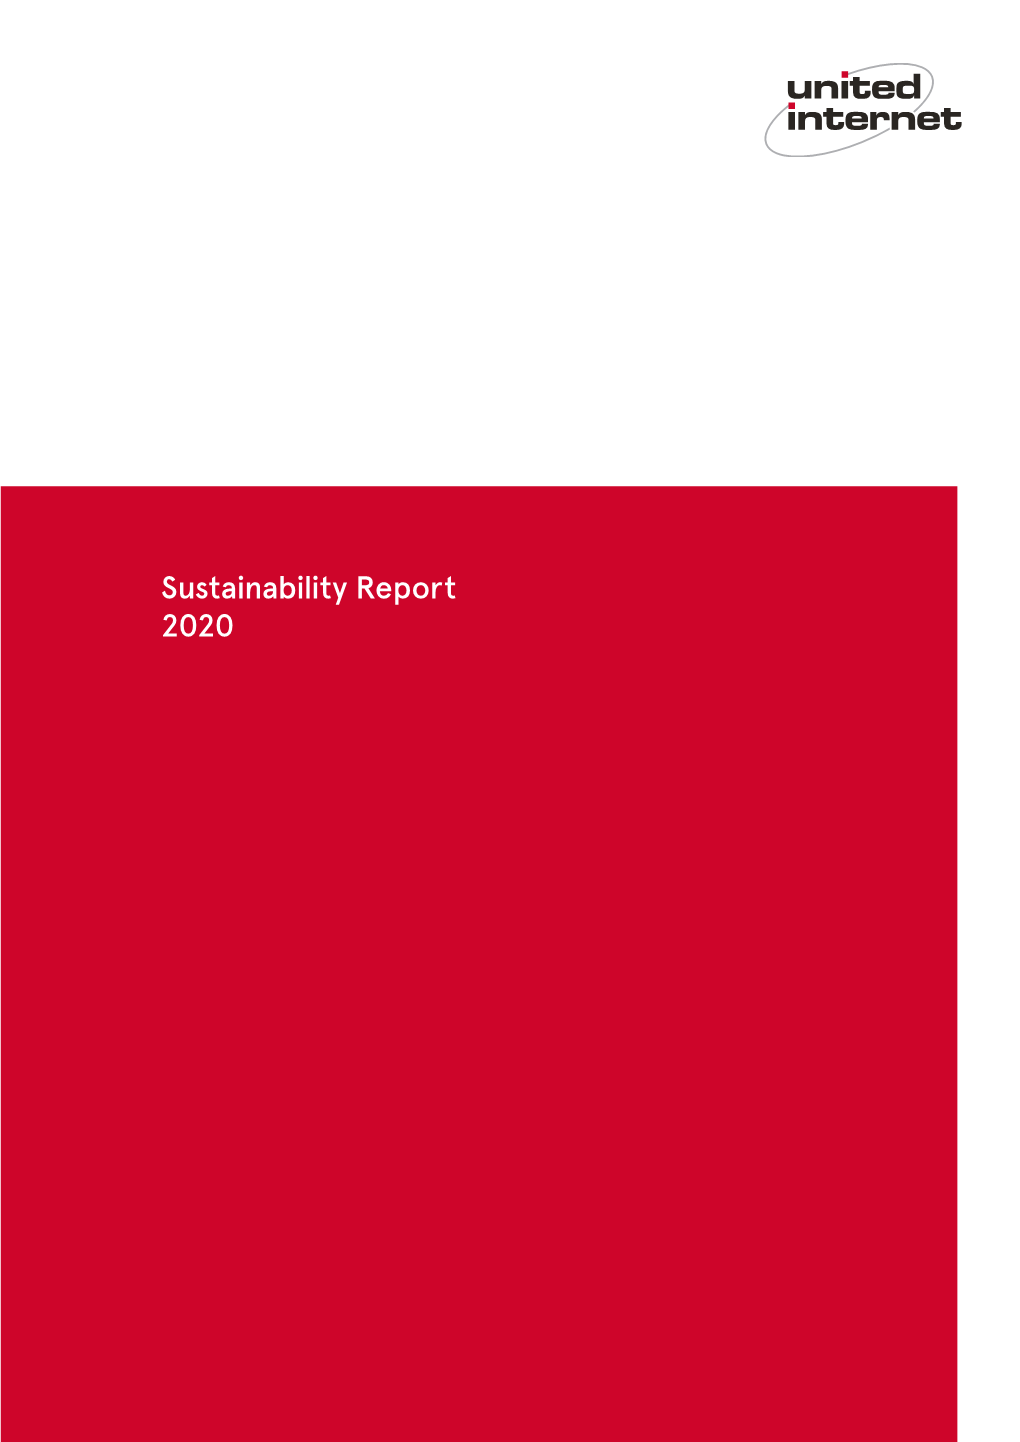 Sustainability Report 2020, United Internet